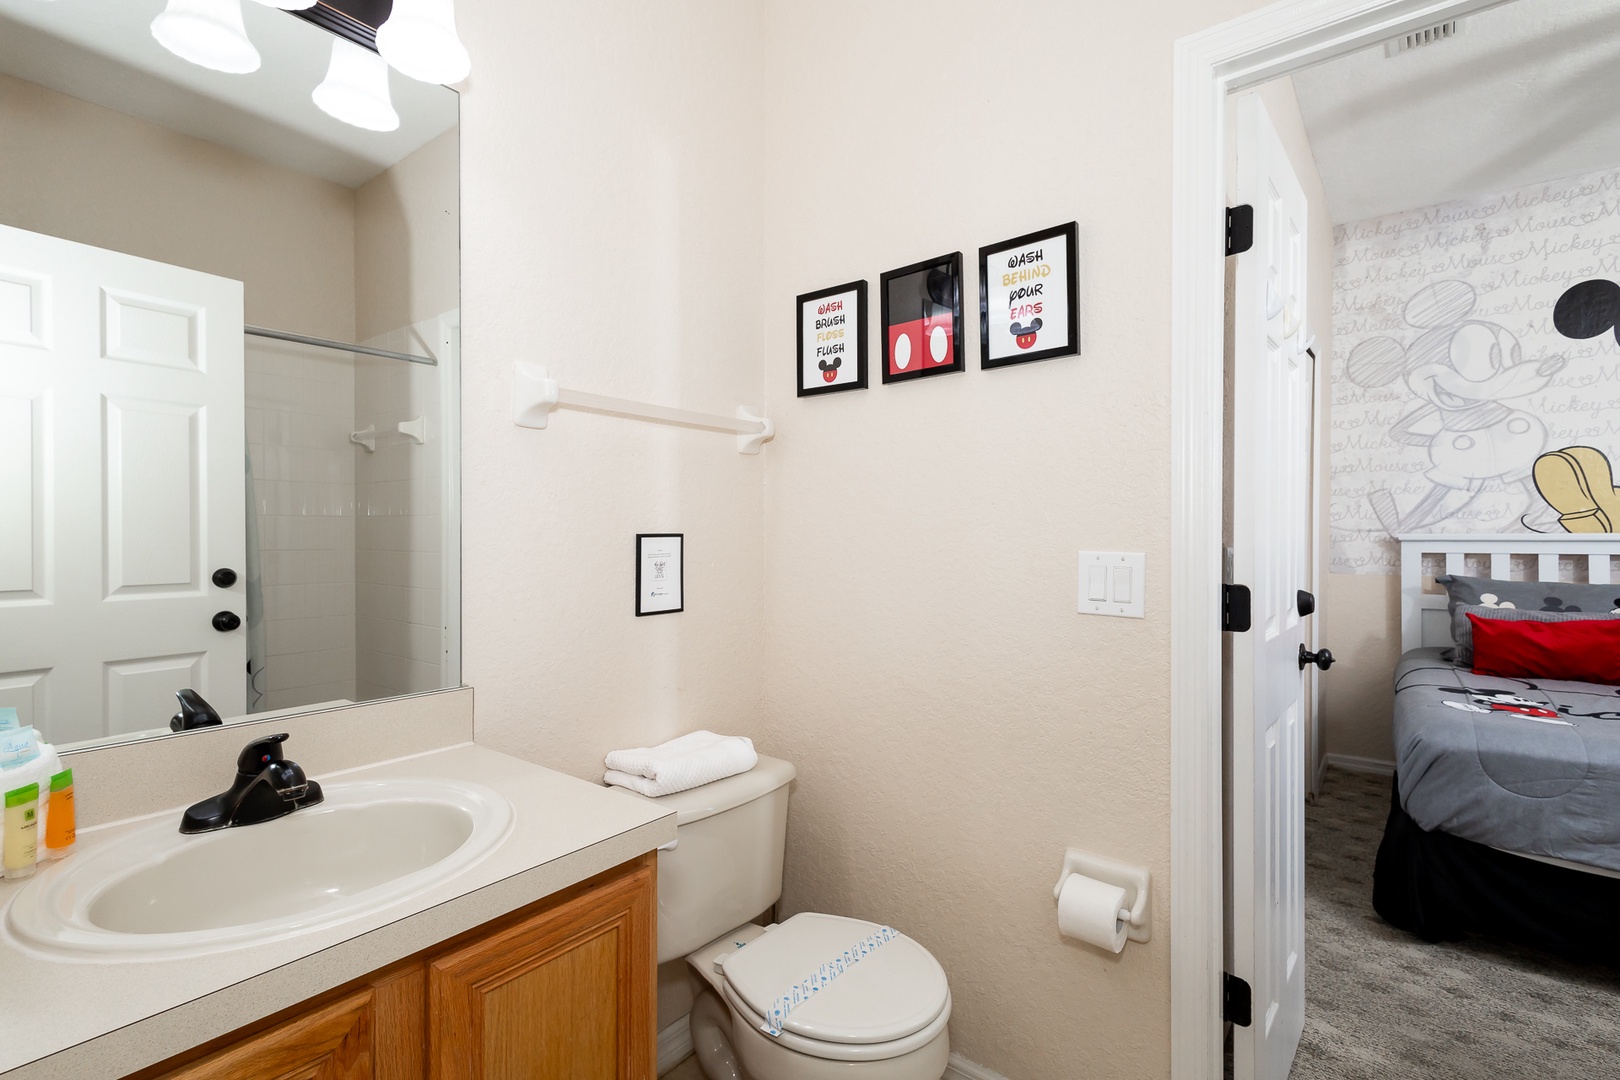 The 1st floor en suite bathroom includes a single vanity & shower/tub combo